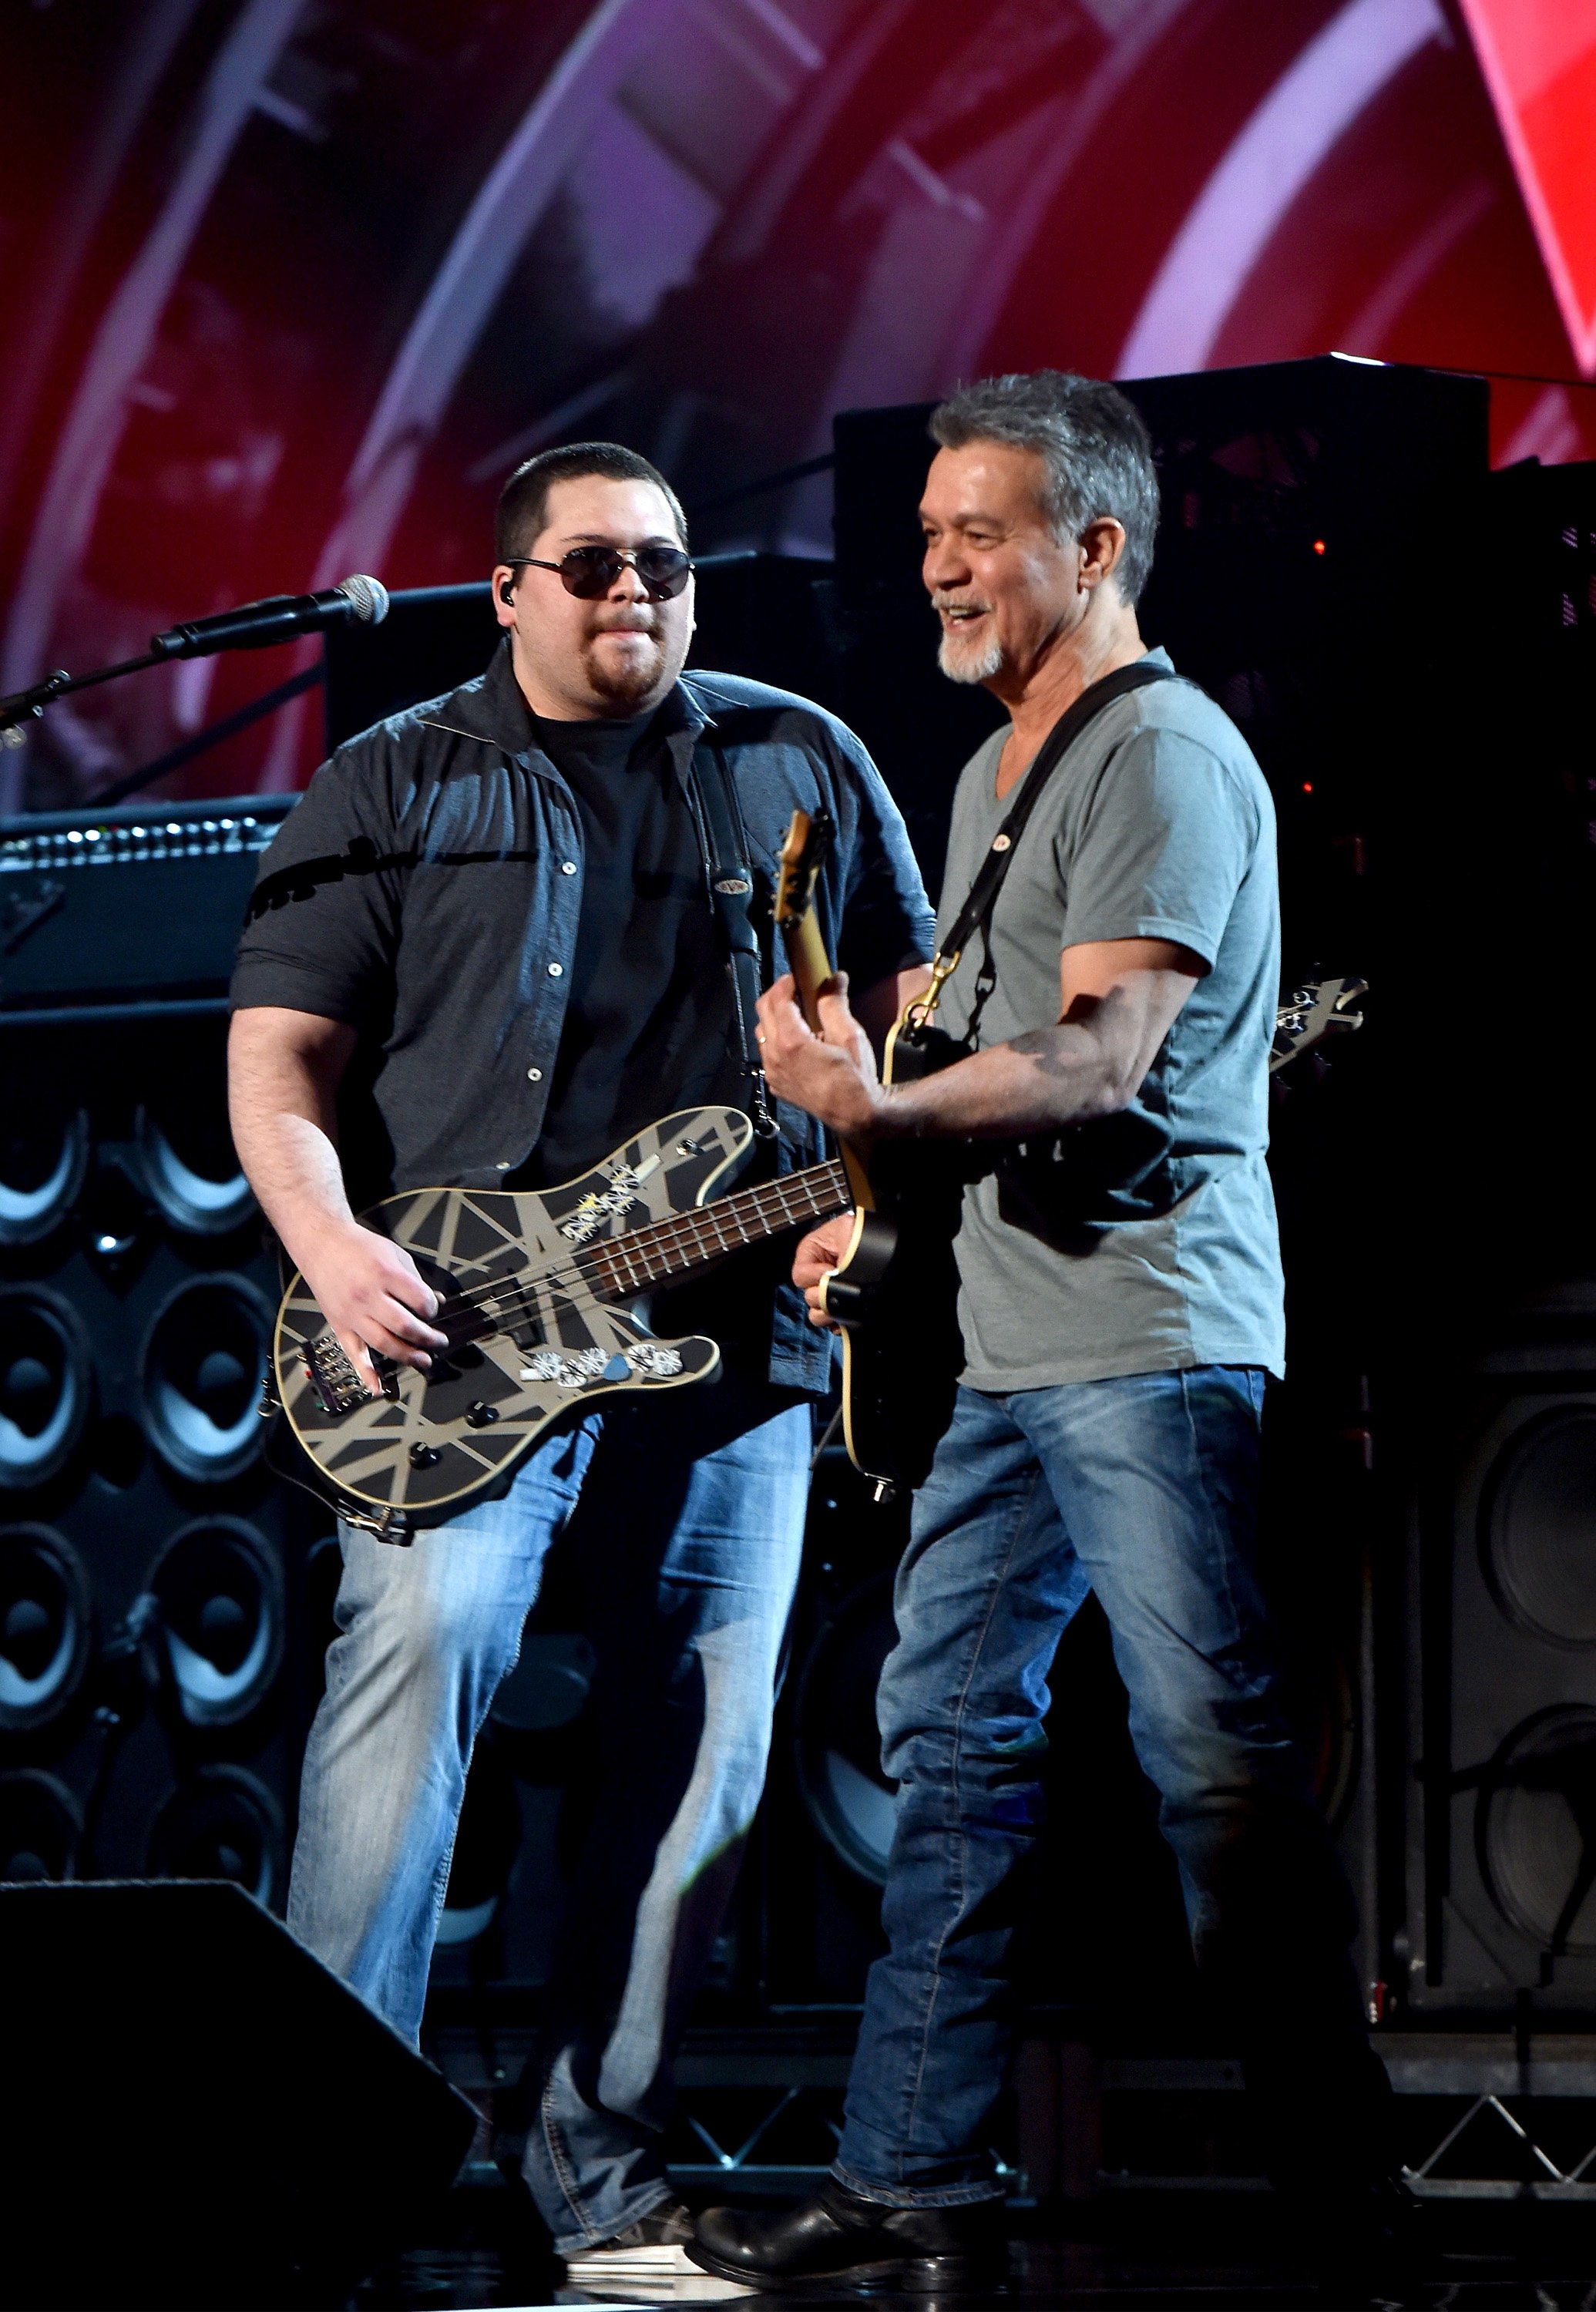 Wolfgang Van Halen and Eddie Van Halen of Van Halen perform onstage at the 2015 Billboard Music Awards at MGM Grand Garden Arena on May 17, 2015, in Las Vegas, Nevada. | Source: Getty Images